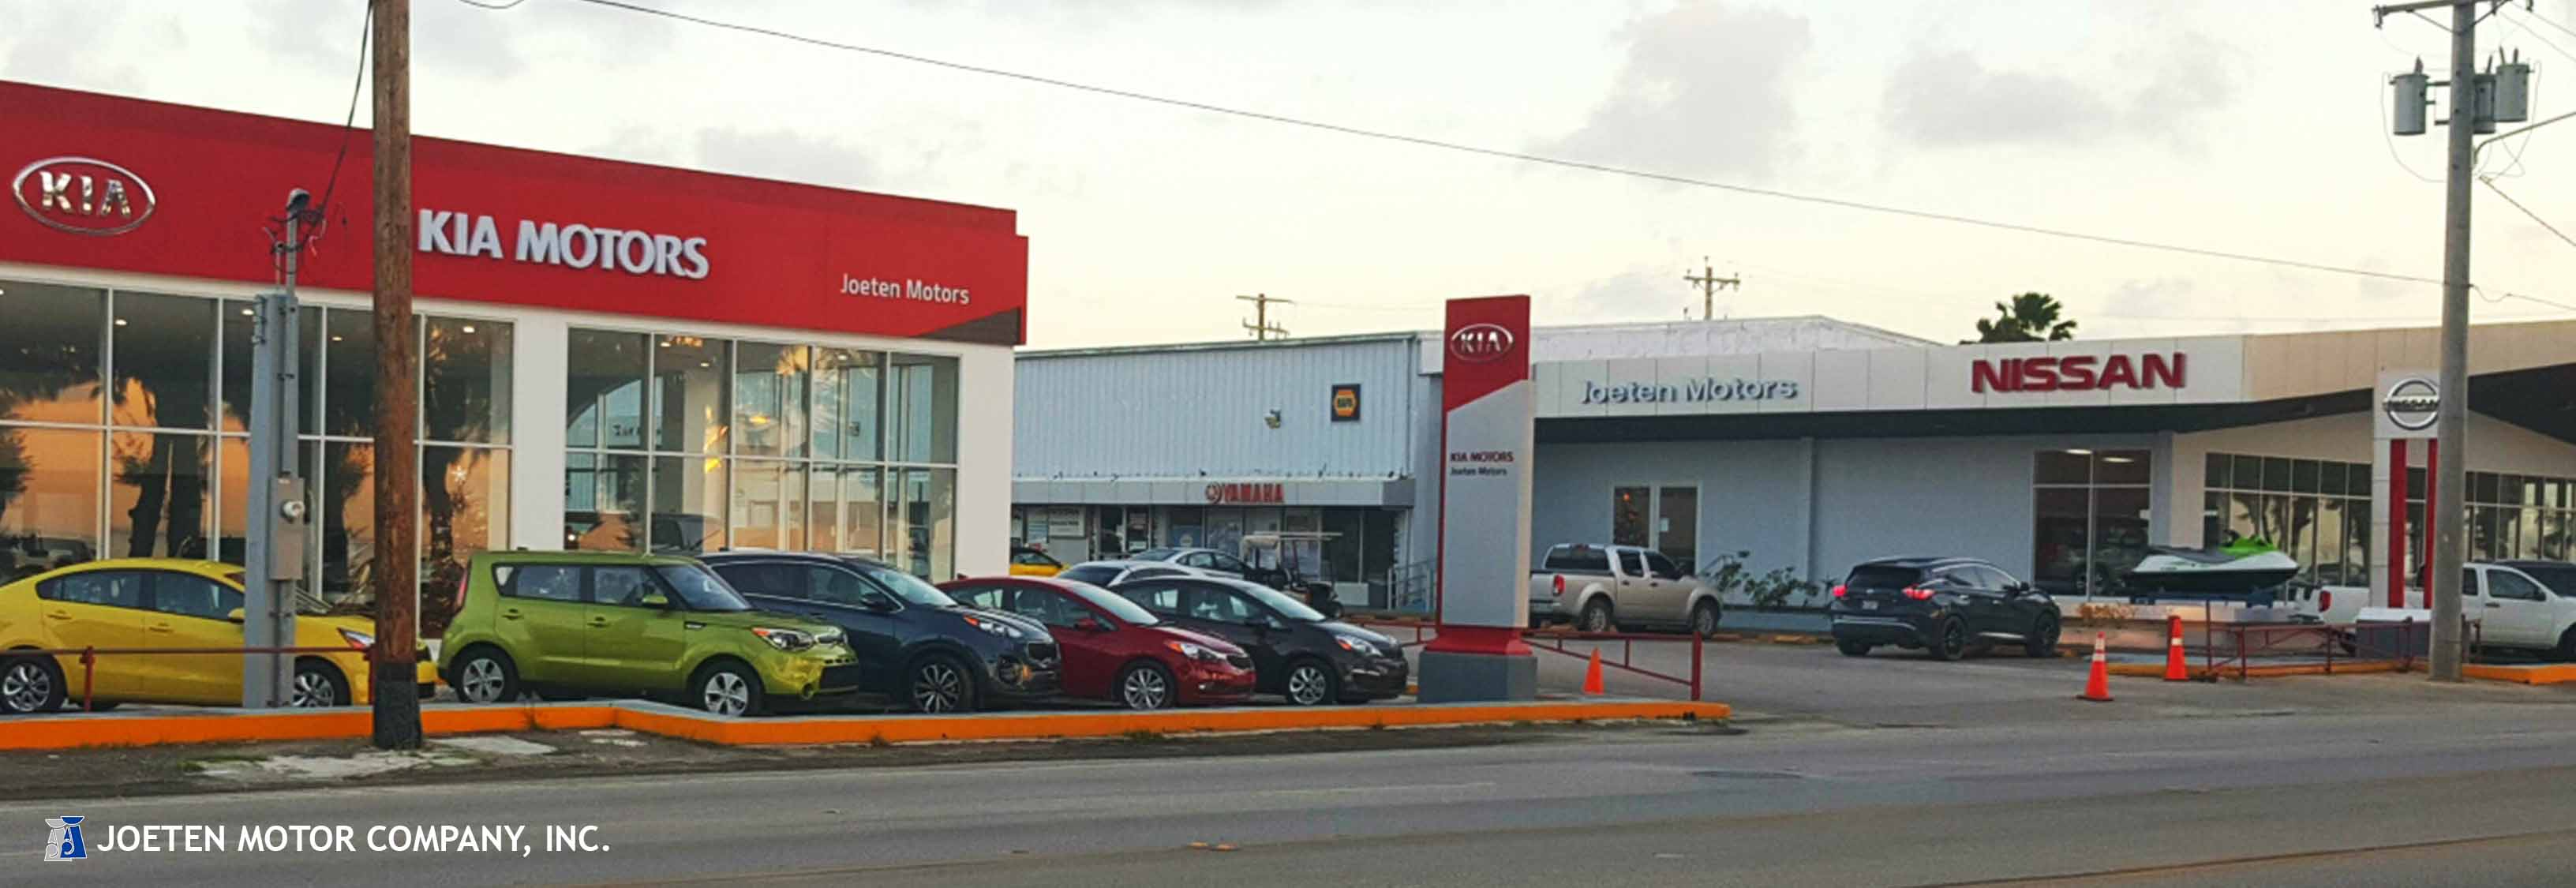 Street view of the Joeten Motors Dealership